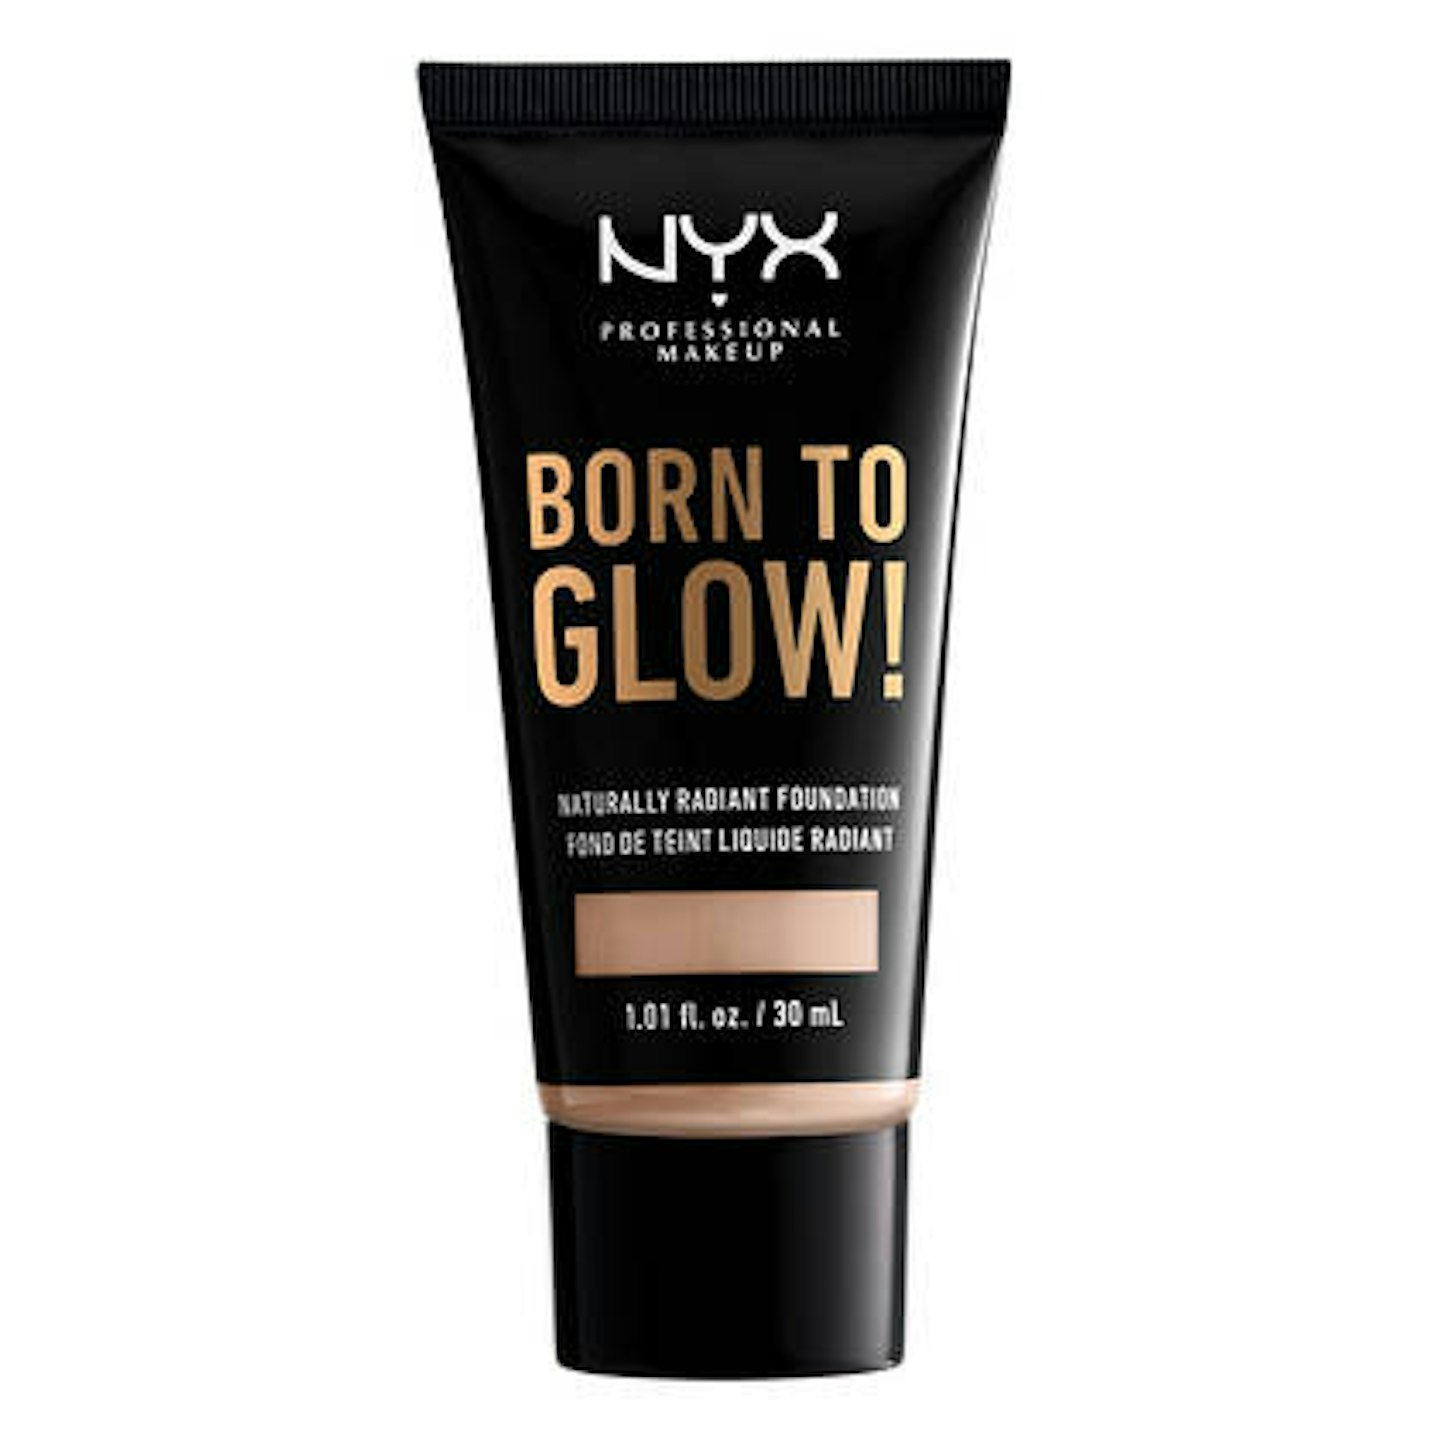 NYX Born To Glow Naturally Radiant Foundation, £10